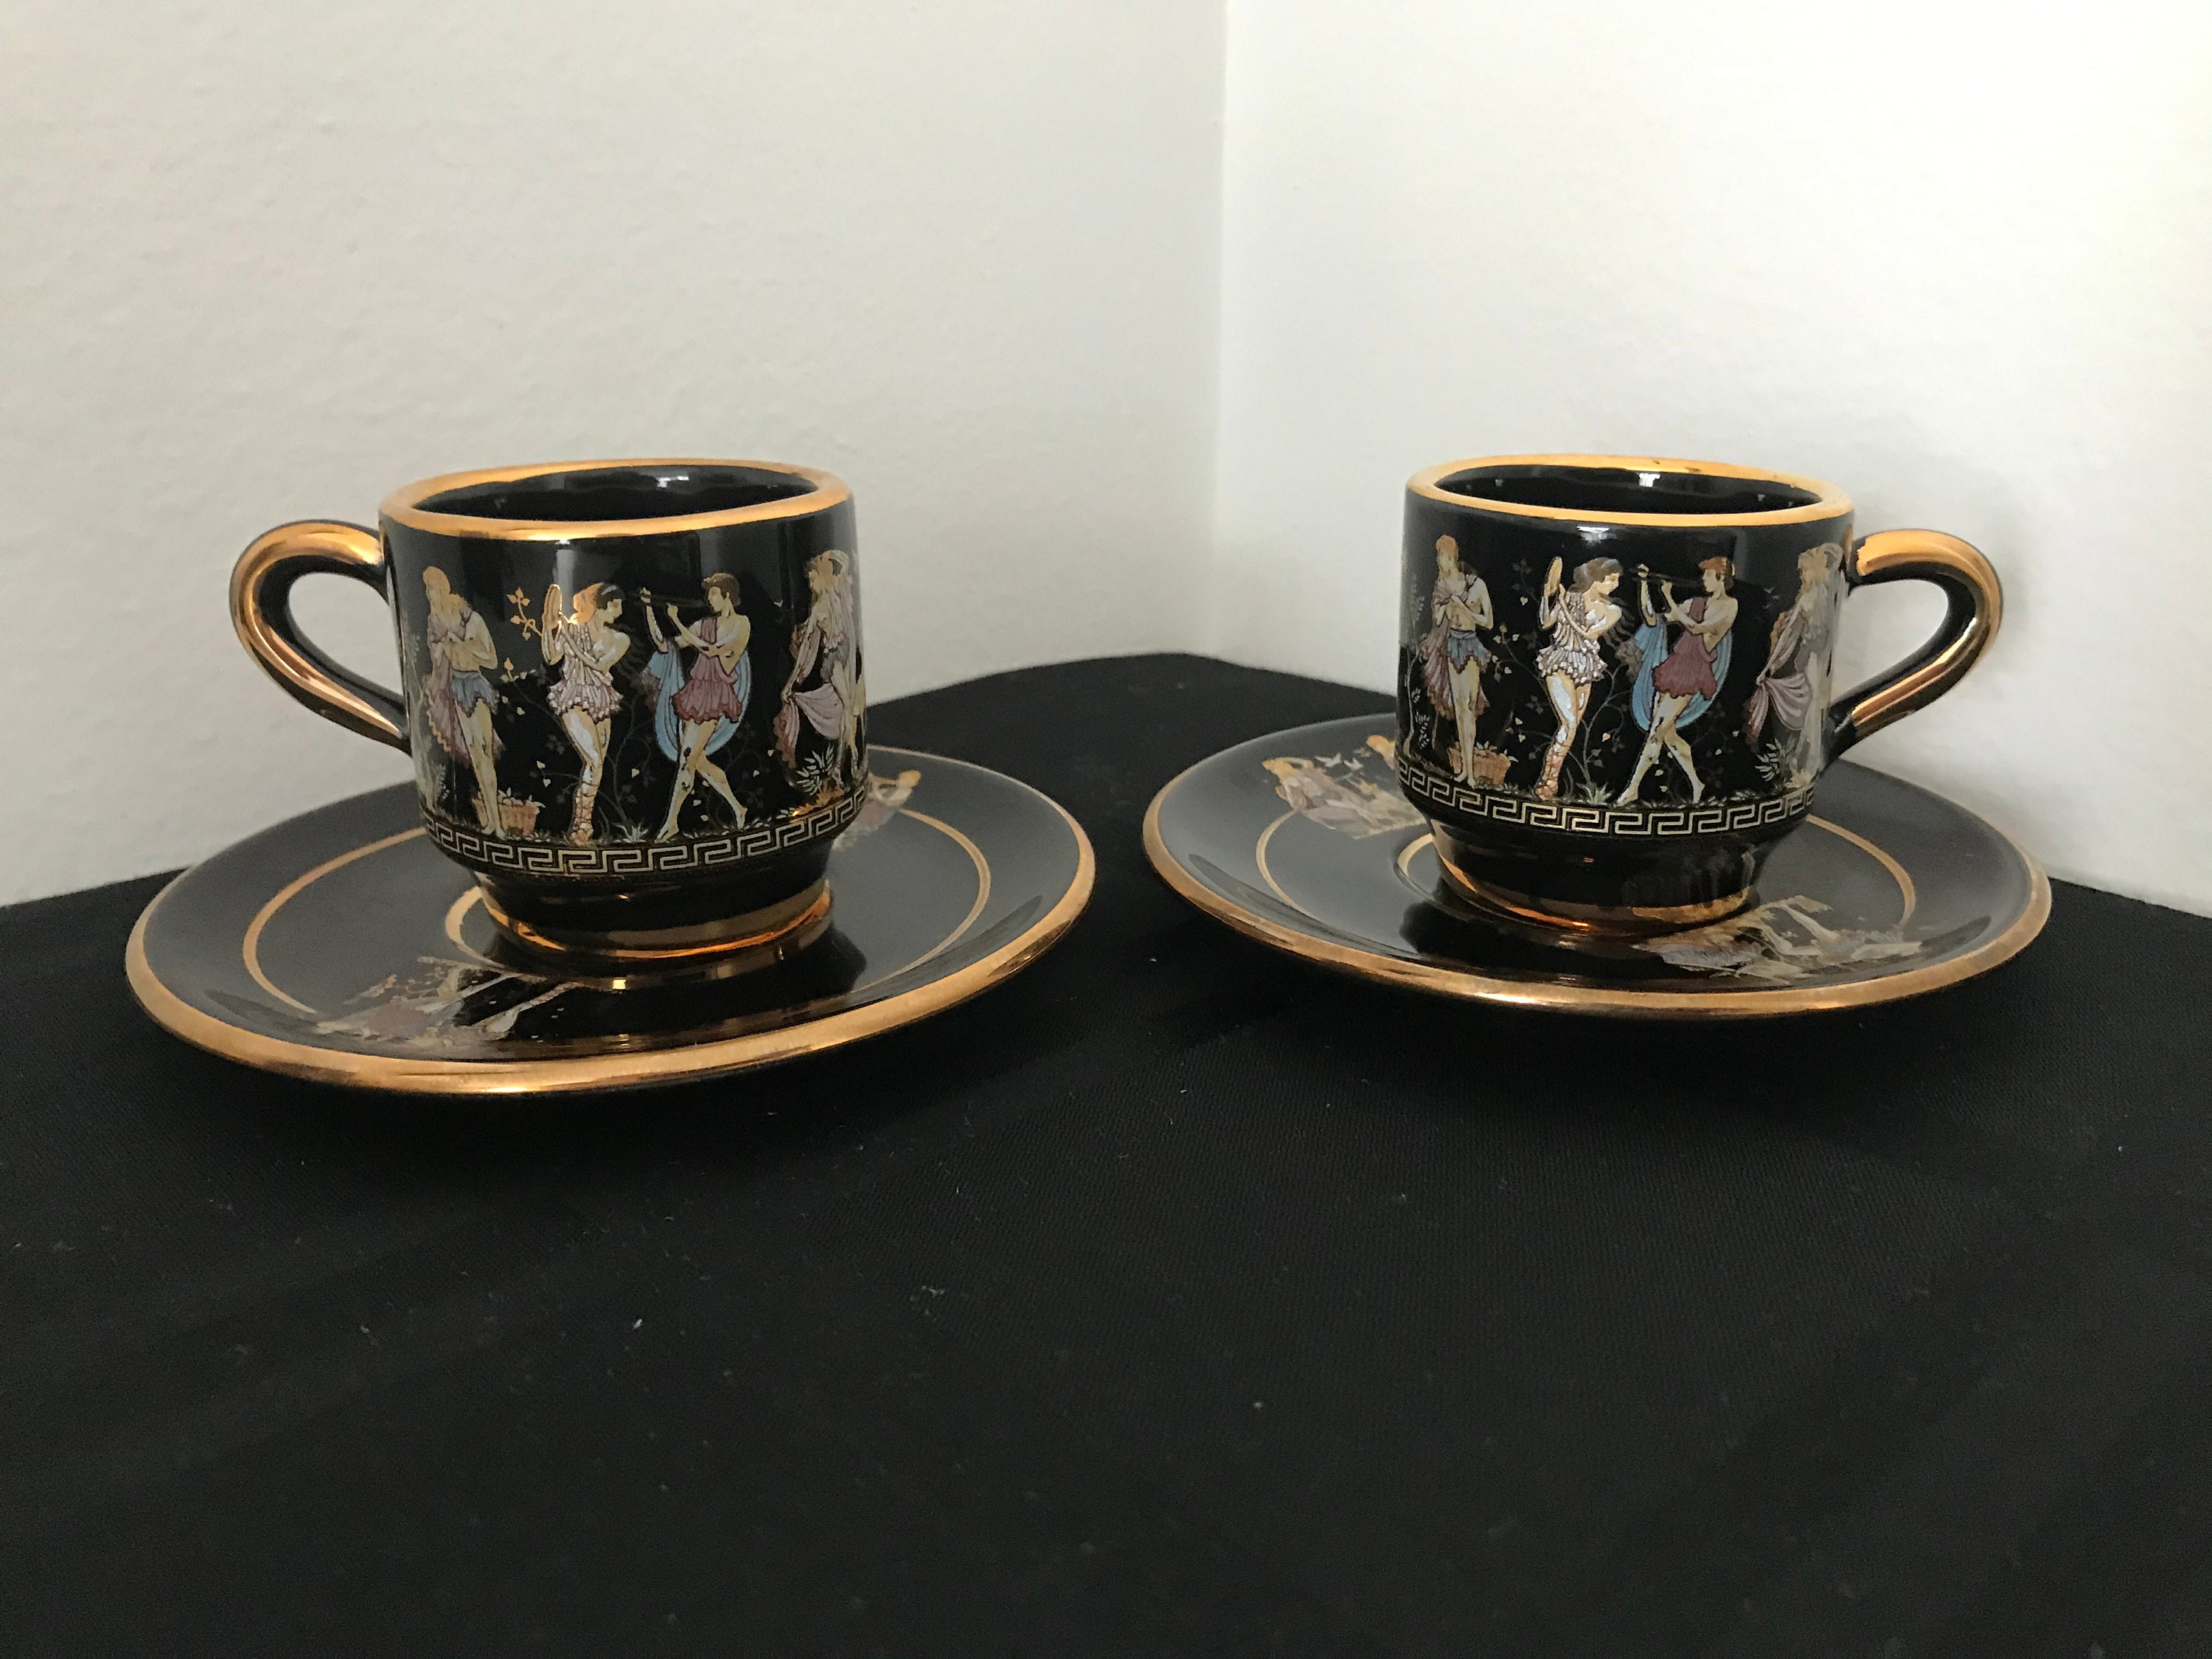 5oz-8oz Ceramic Espresso Coffee Cup Terra Cotta Clay Hand 